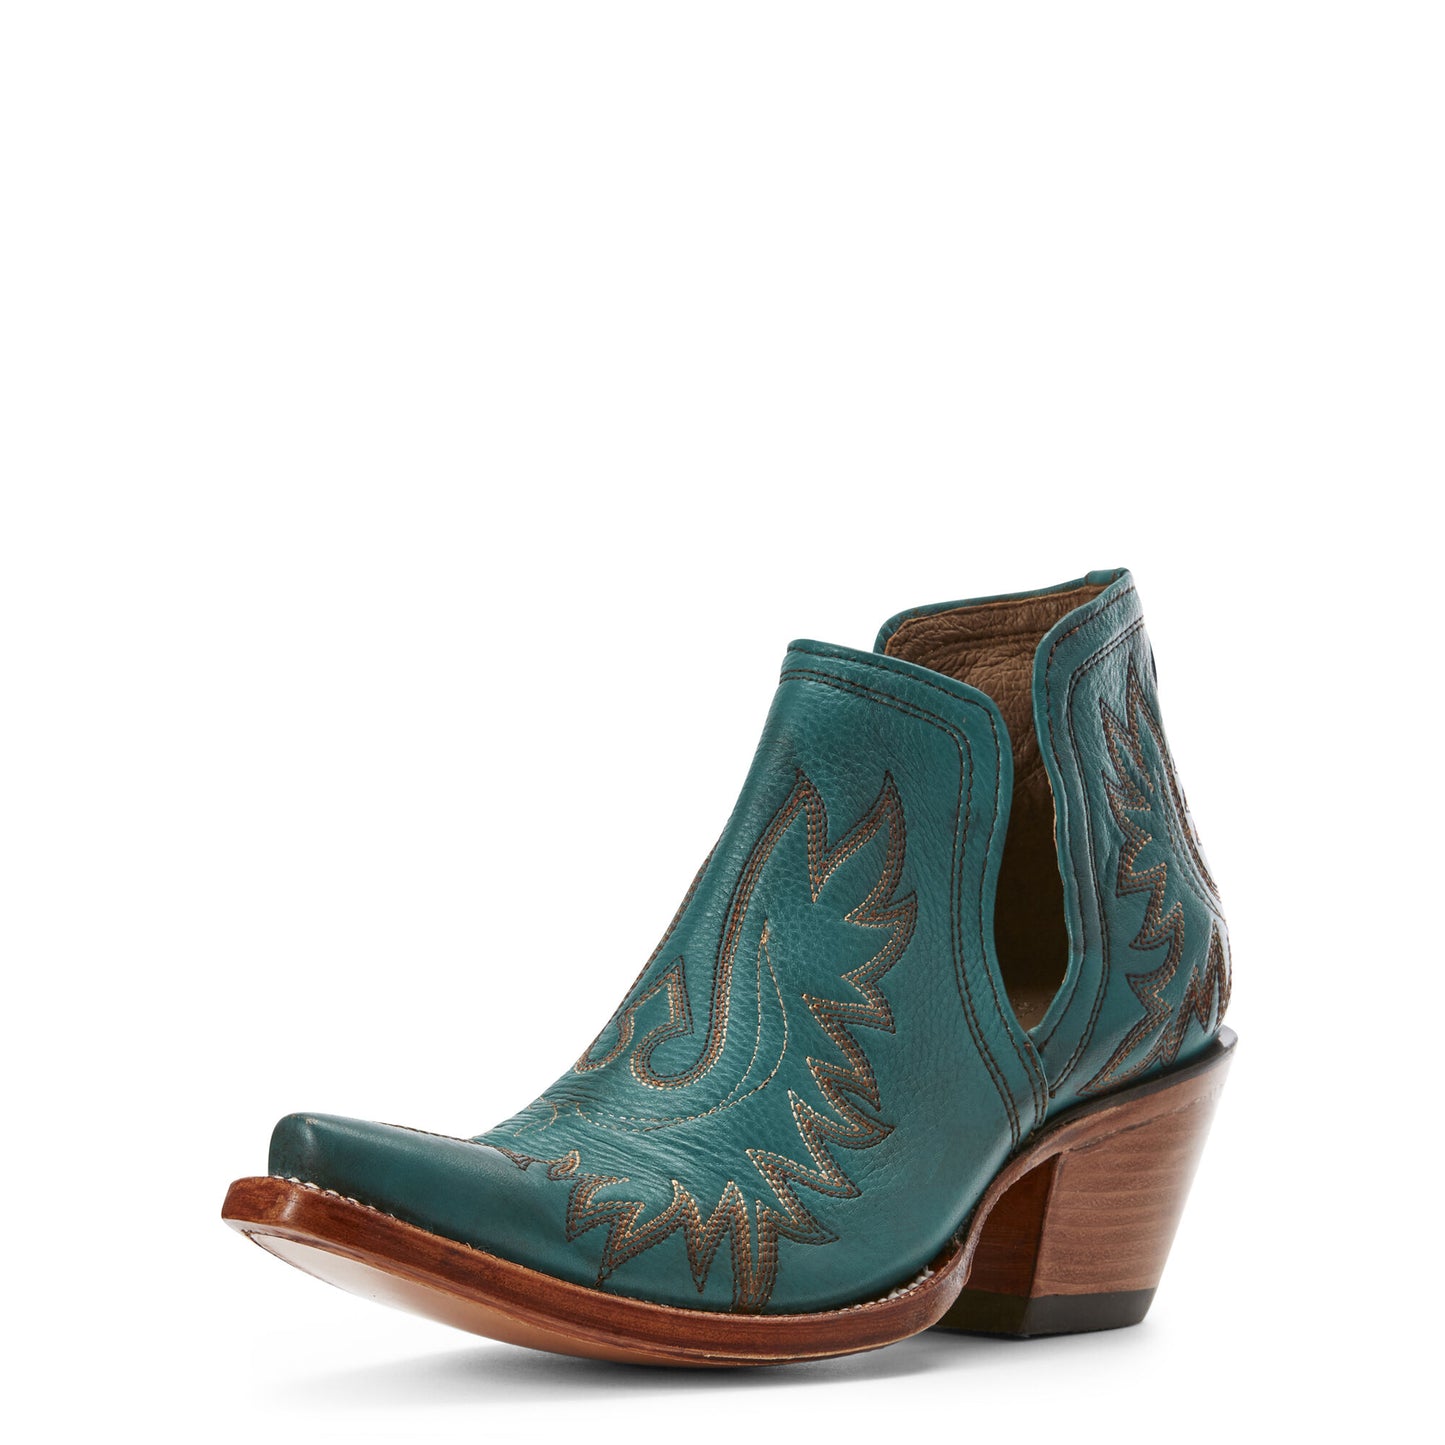 Ariat Women's Dixon Western Boot - Agate Green